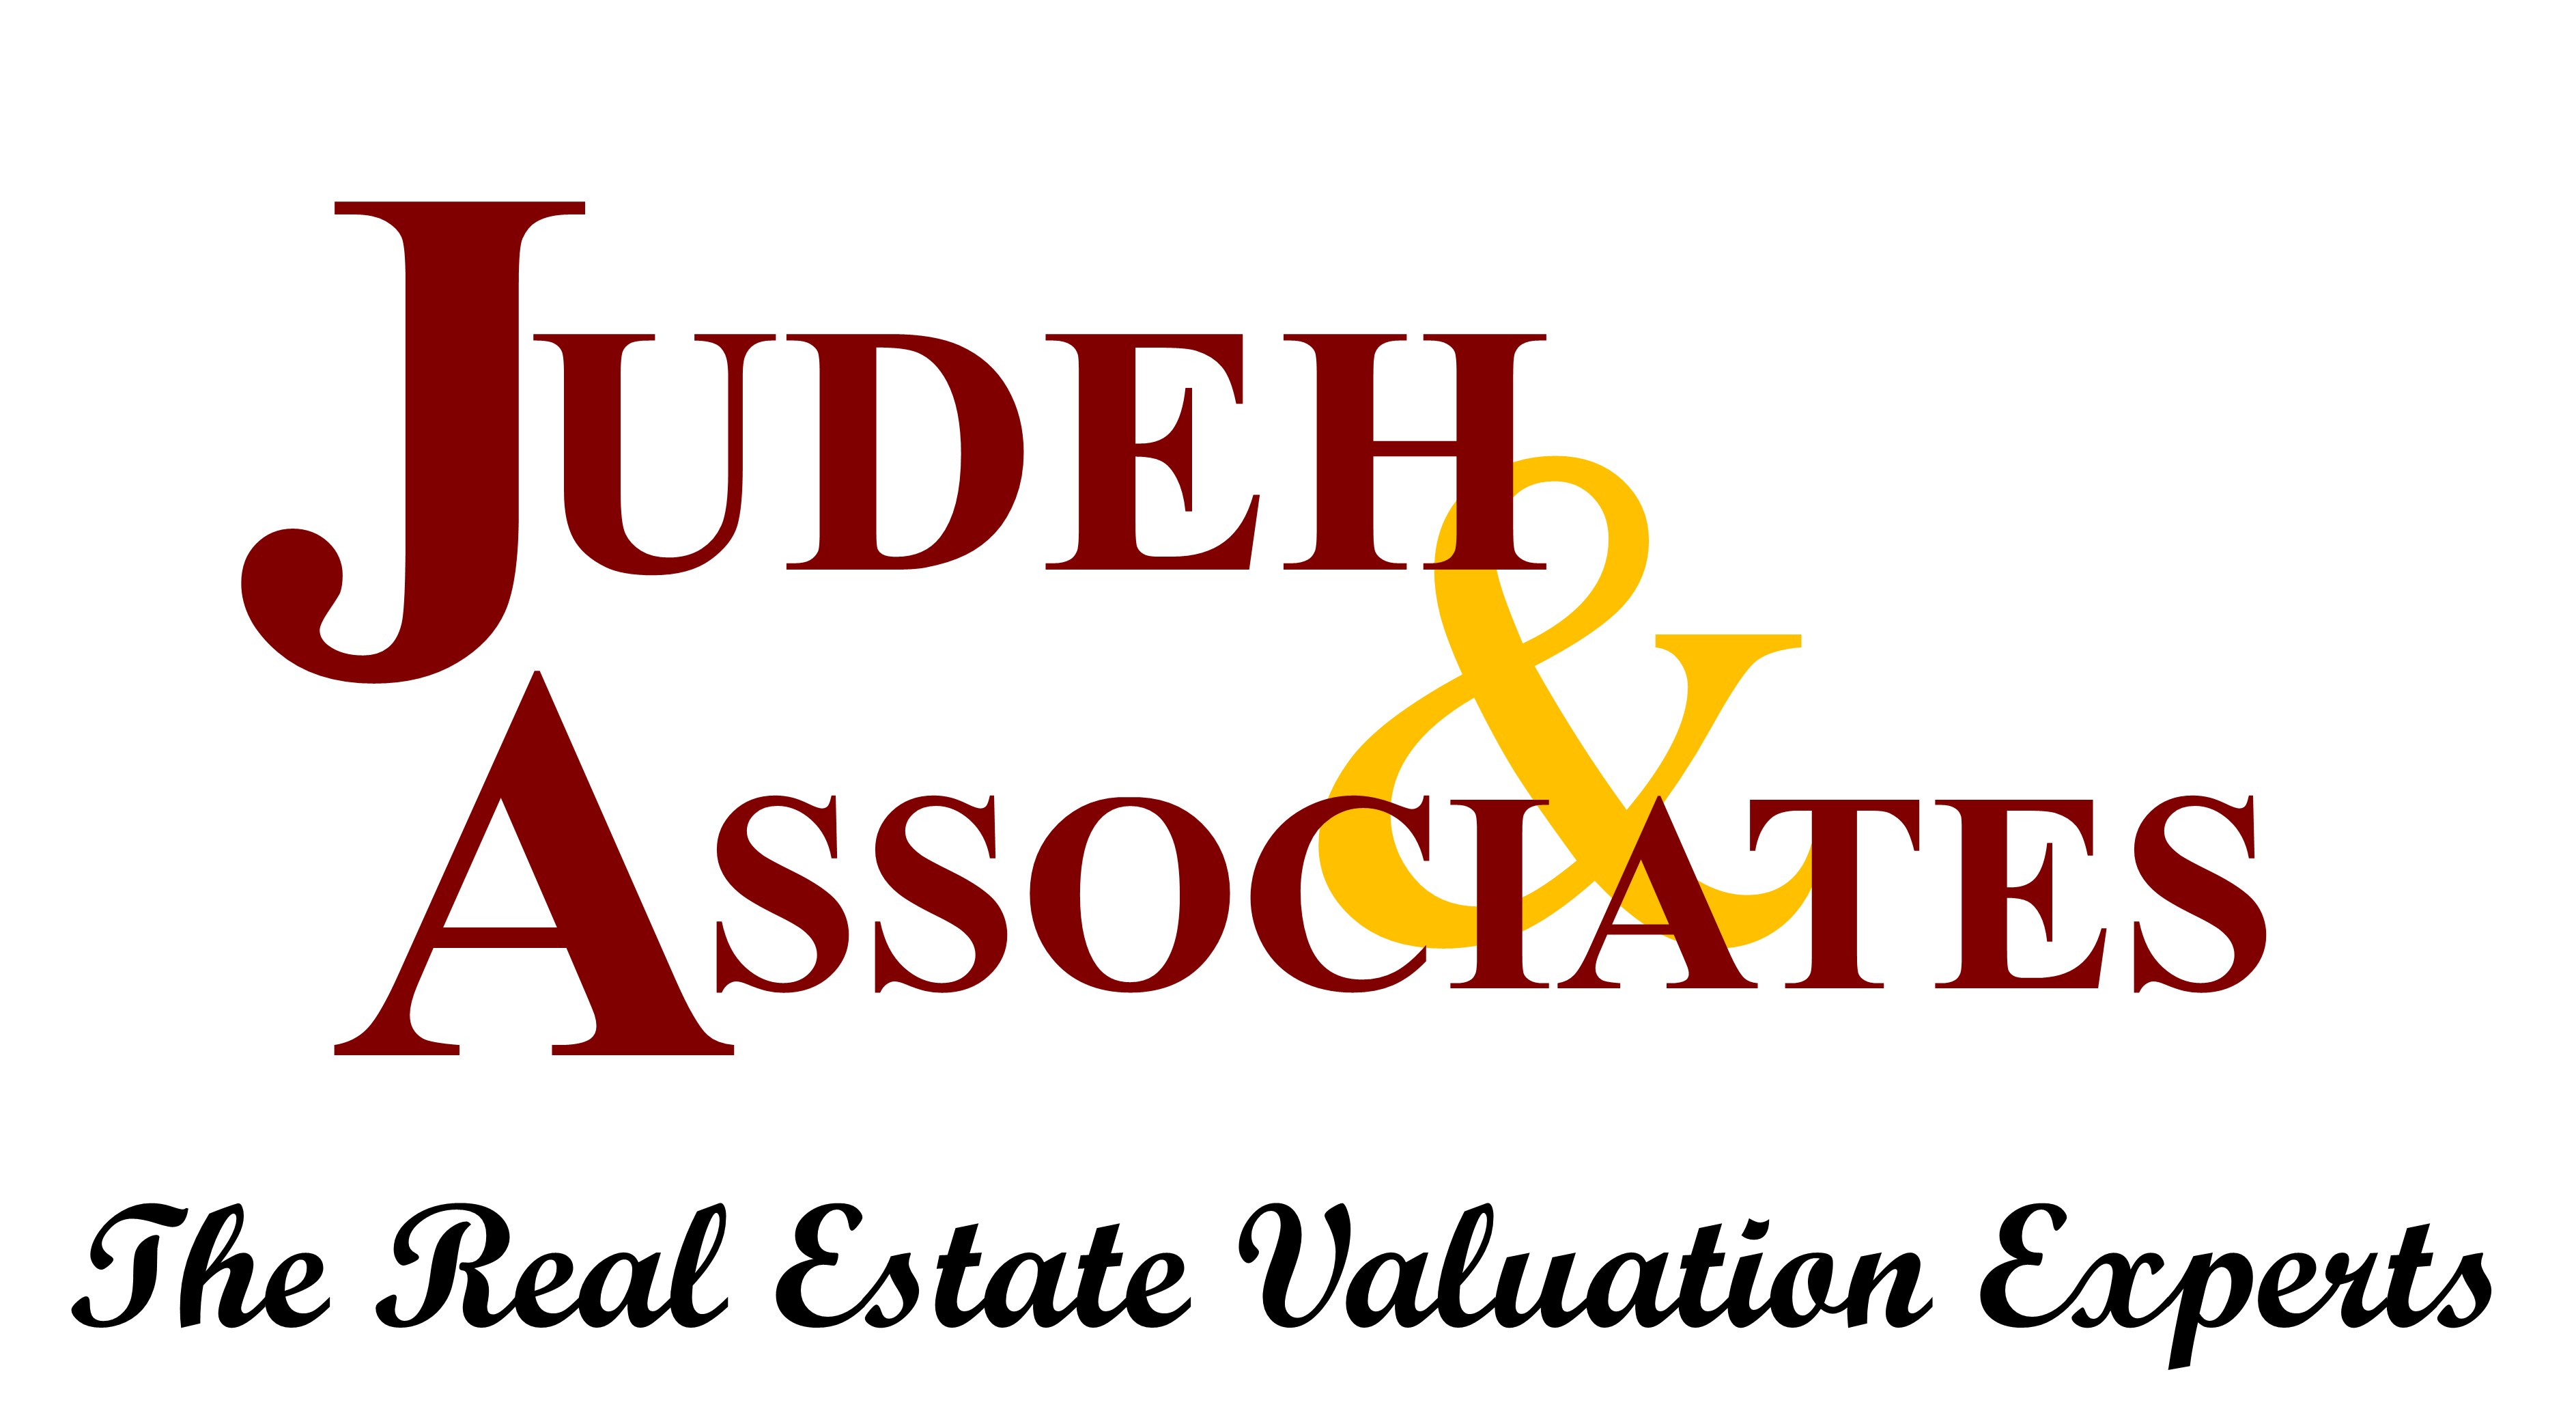 Judeh Associates Logo